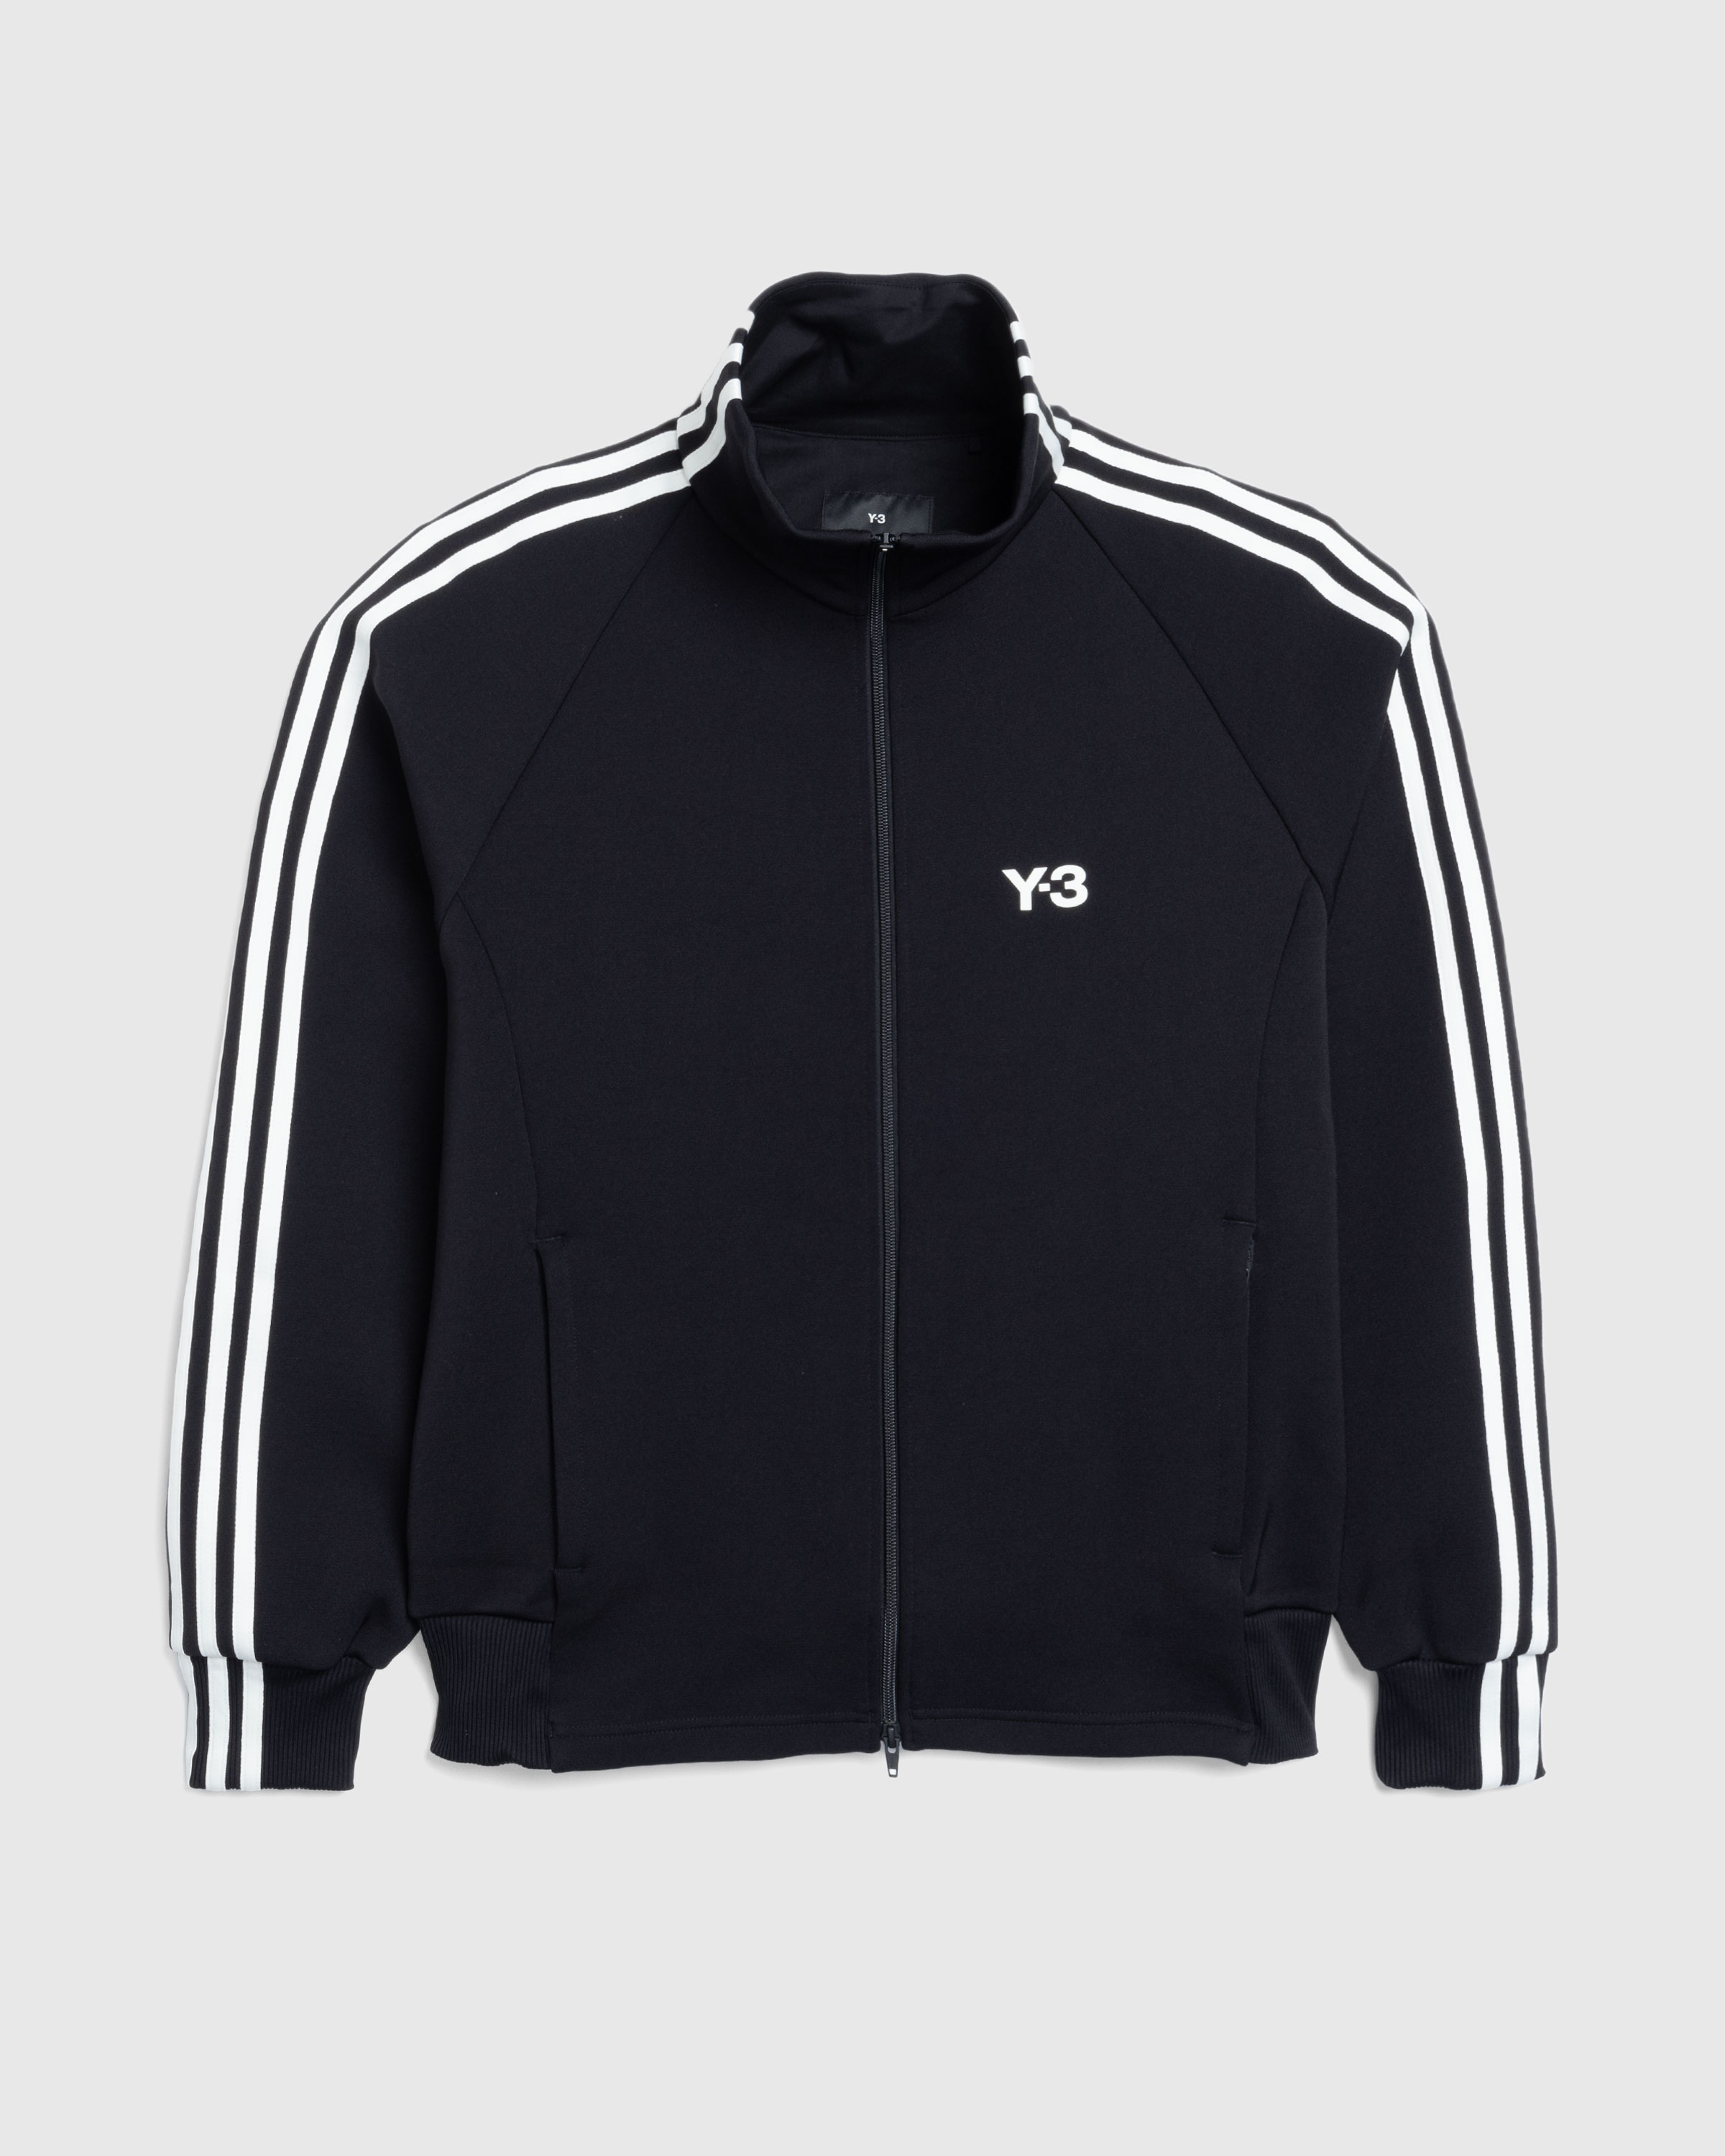 Y-3 – 3 Stripes Track Top Black/White - Outerwear - Black - Image 1